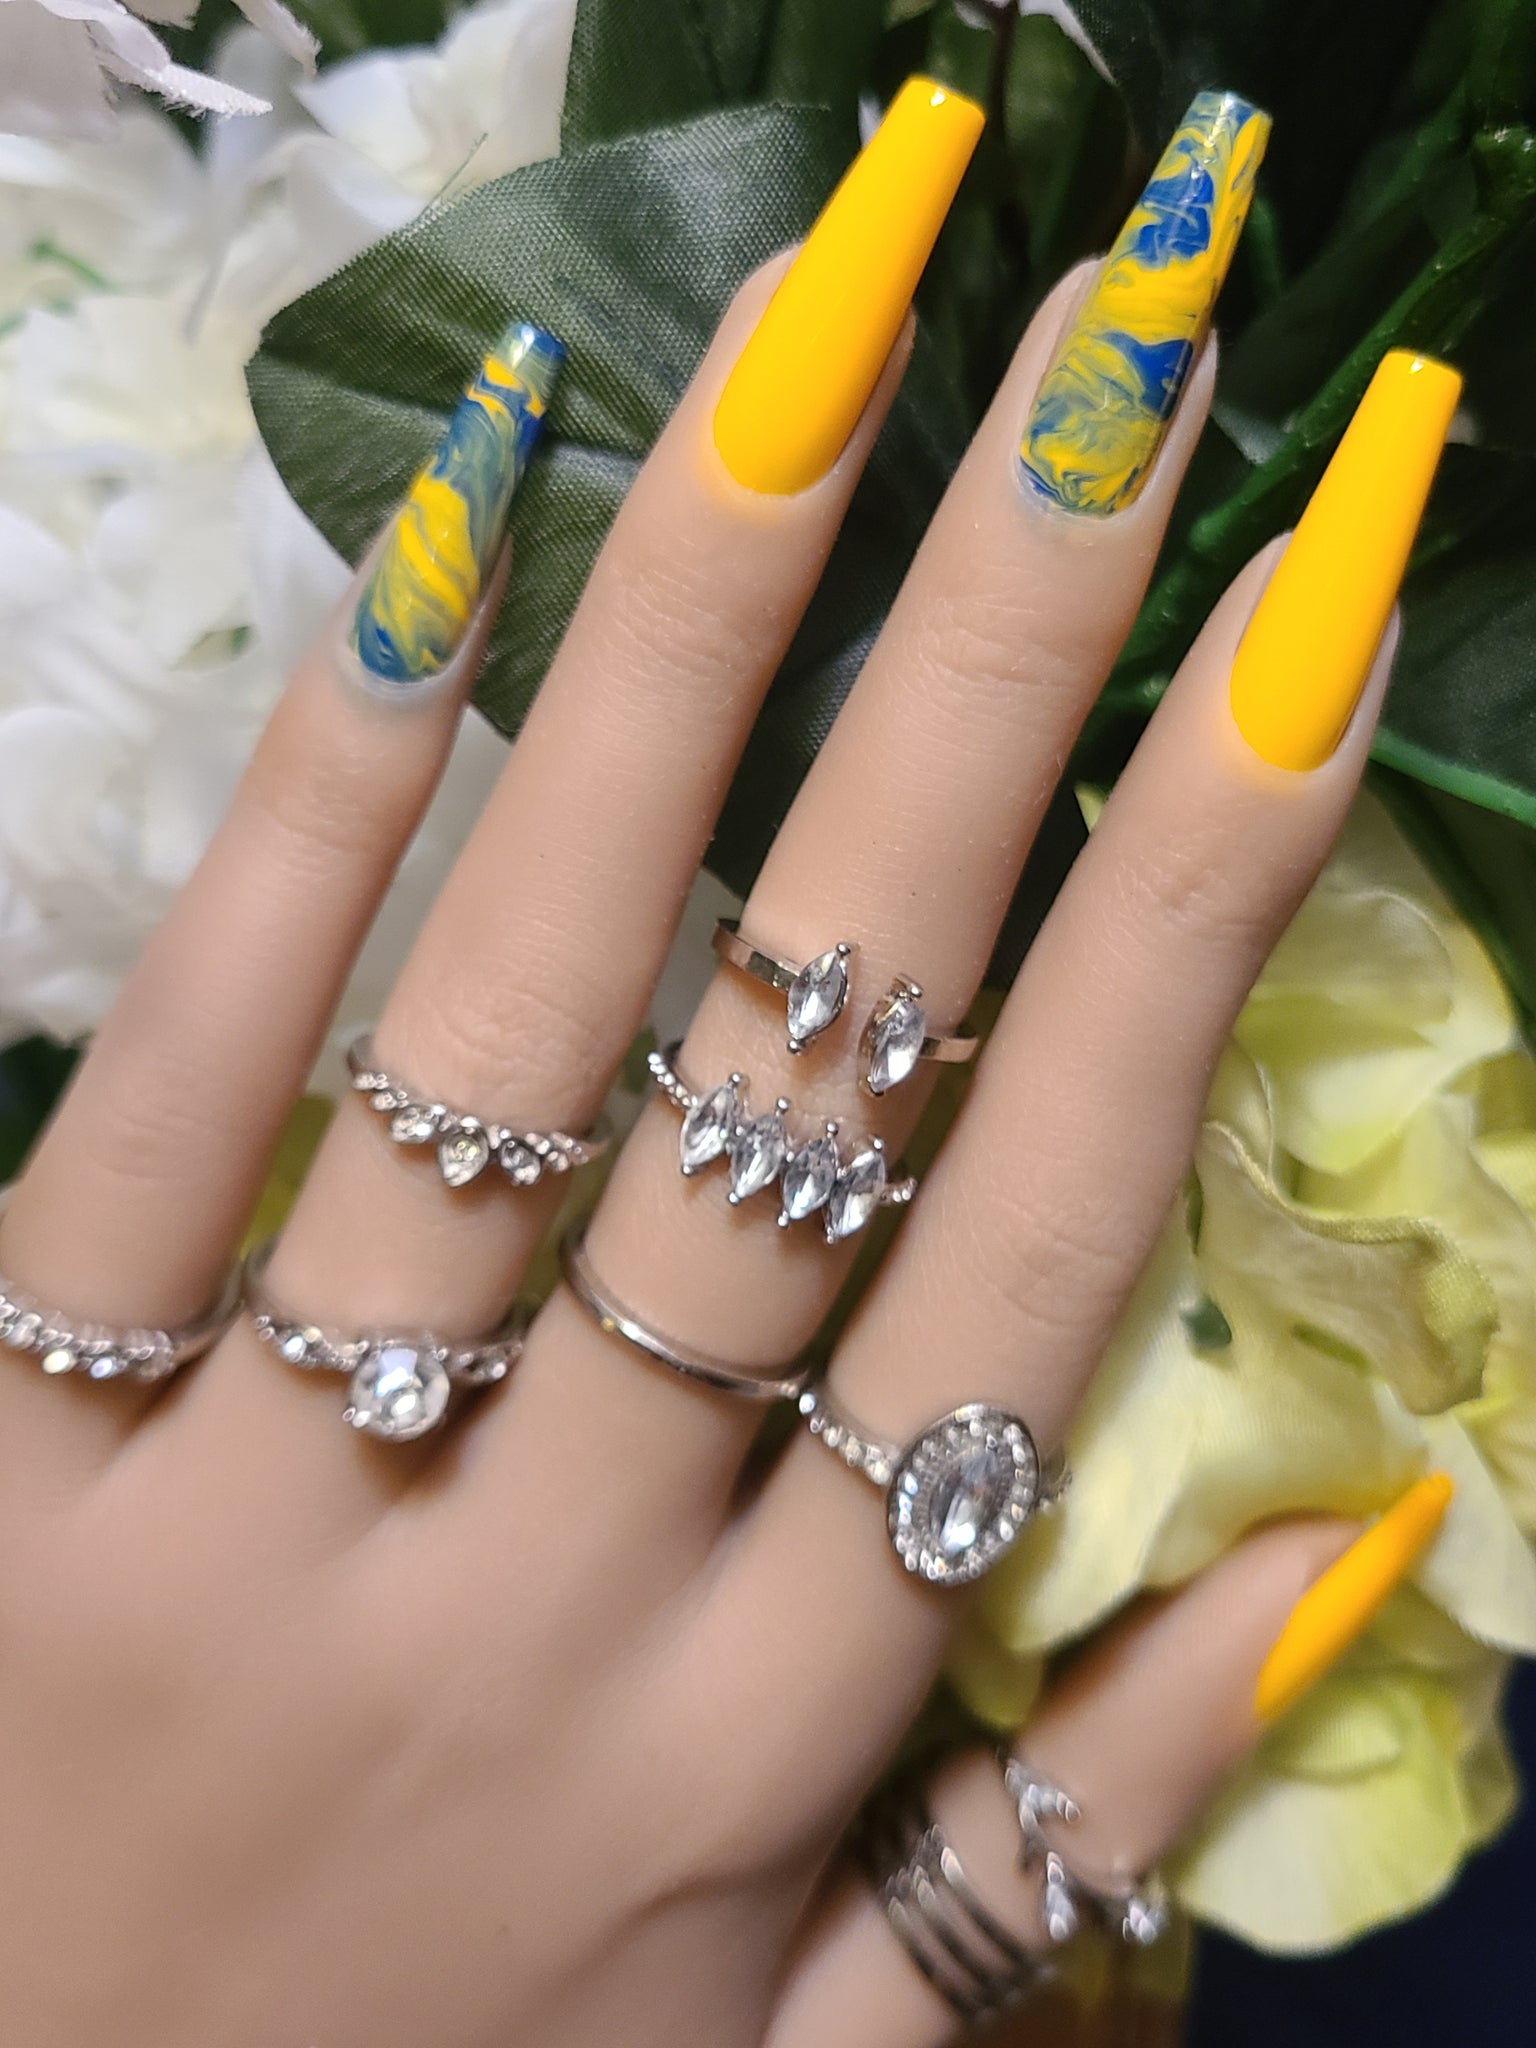 yellow nails designs